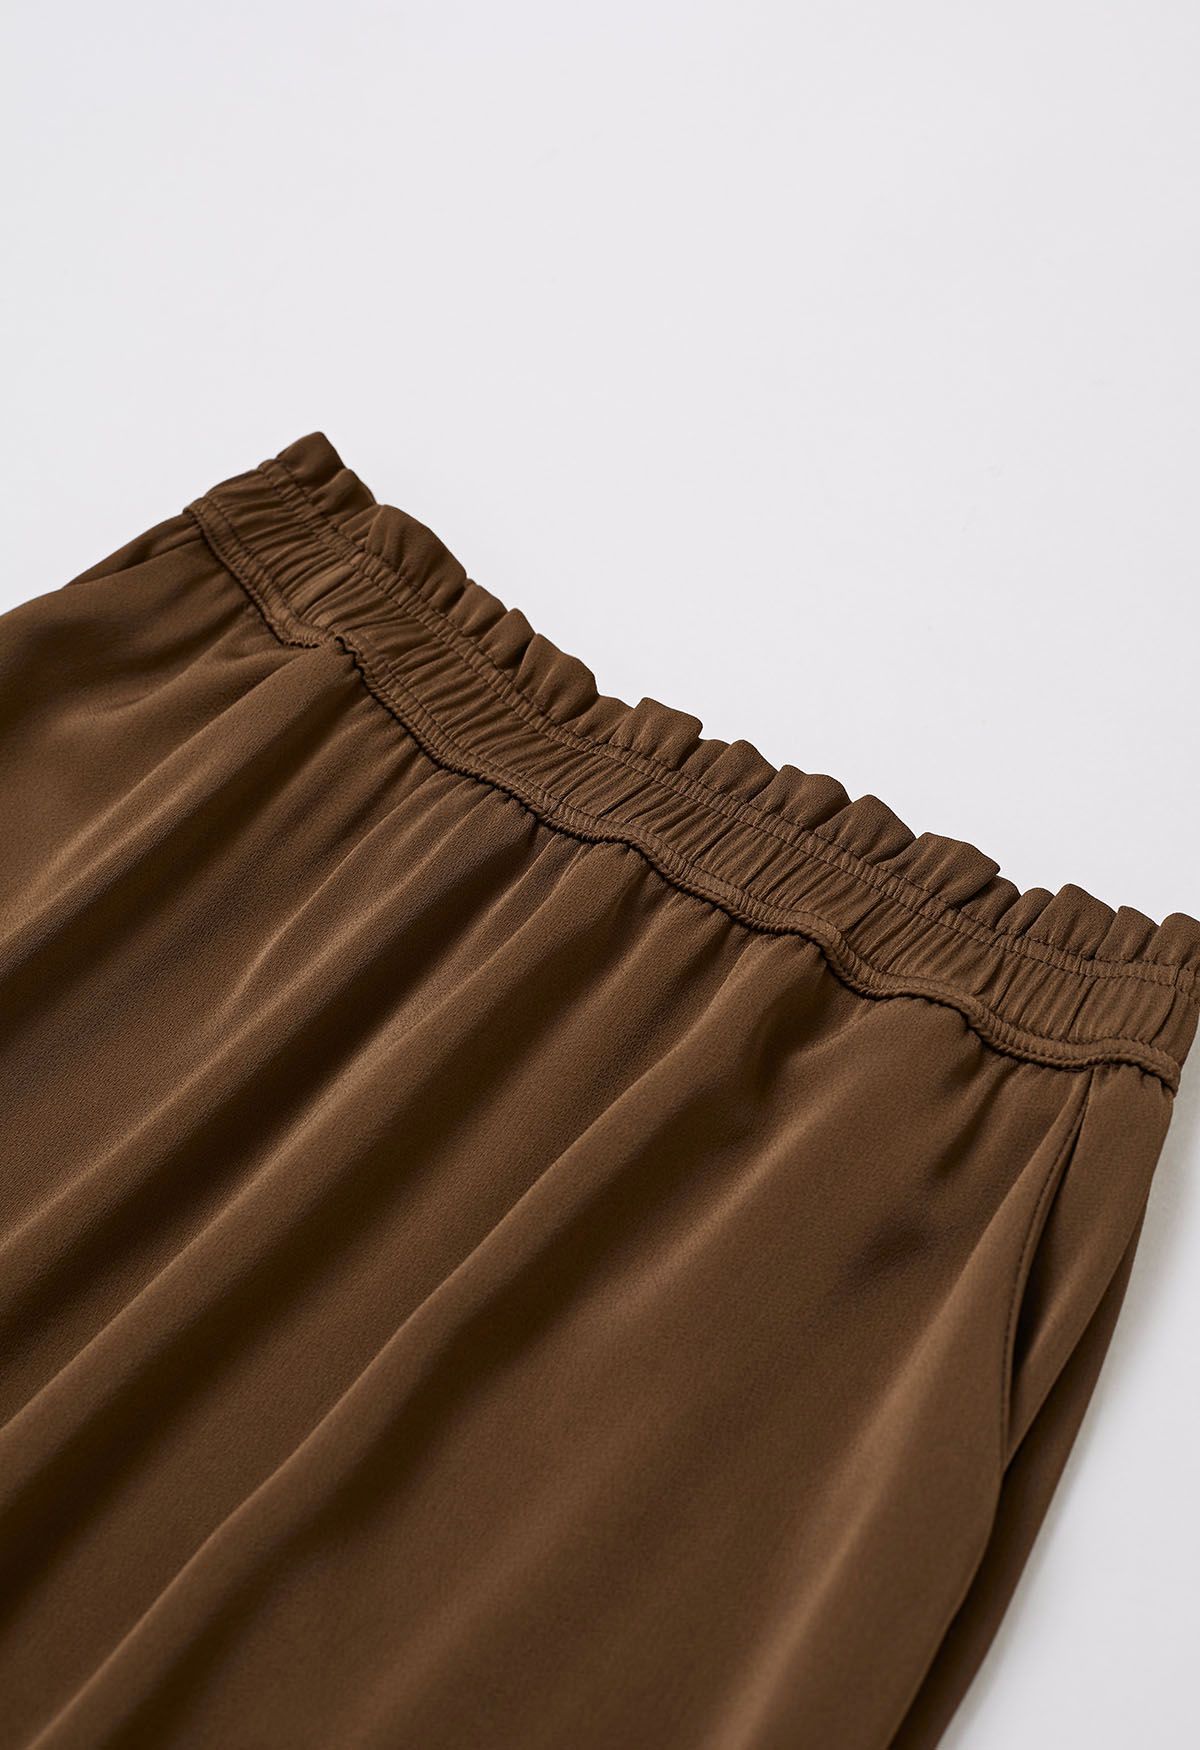 Satin High Waist Midi Skirt in Brown